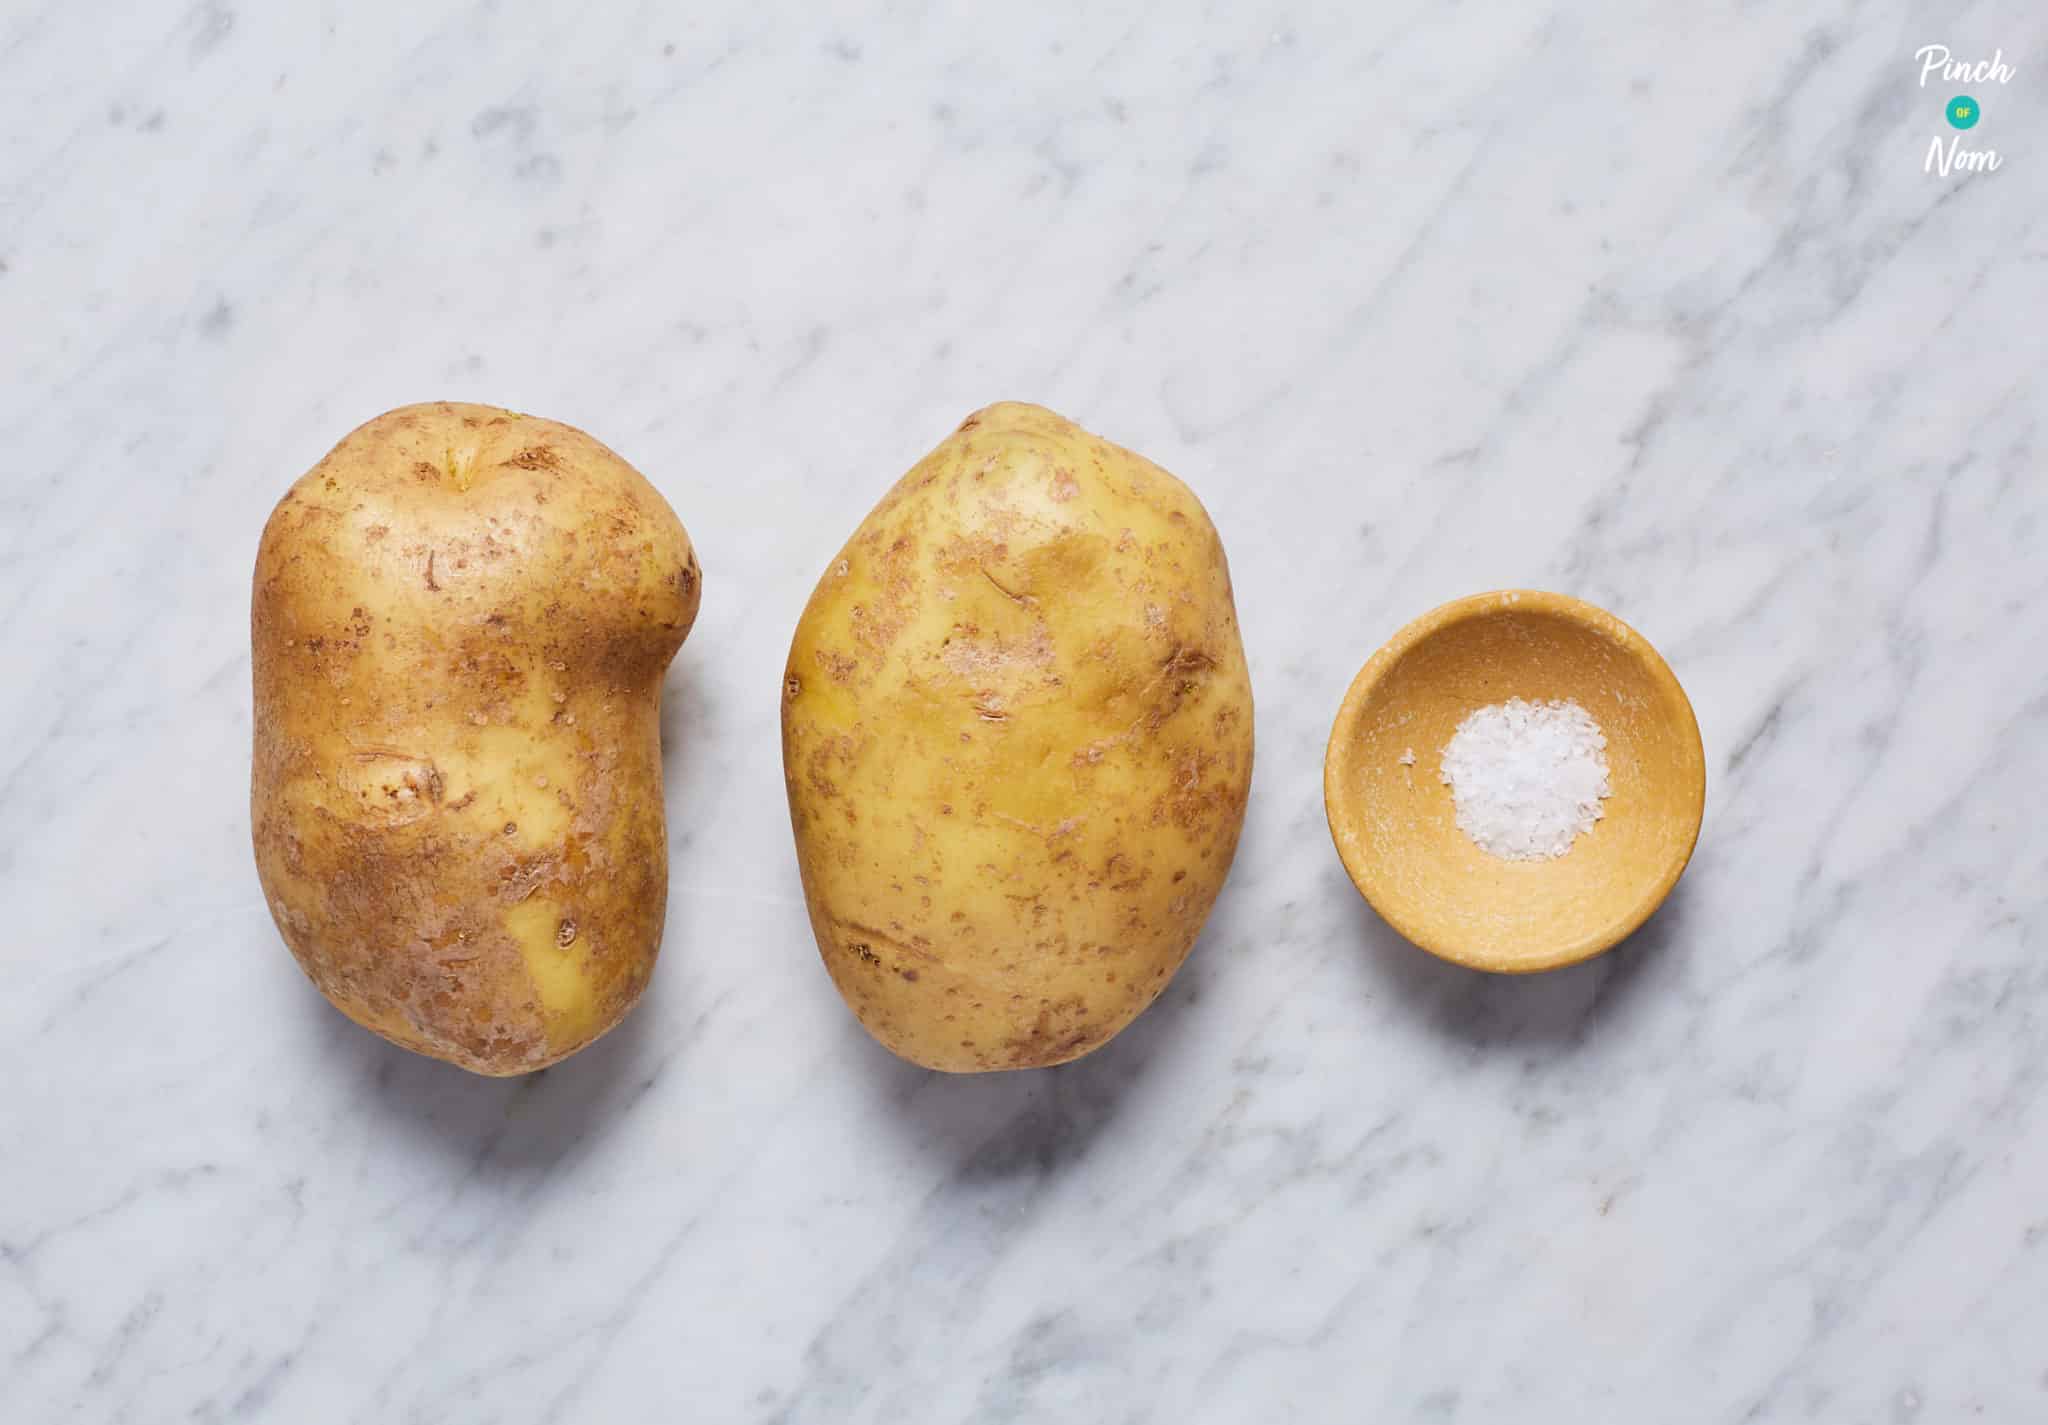 Roast Potatoes - Pinch of Nom Slimming Recipes